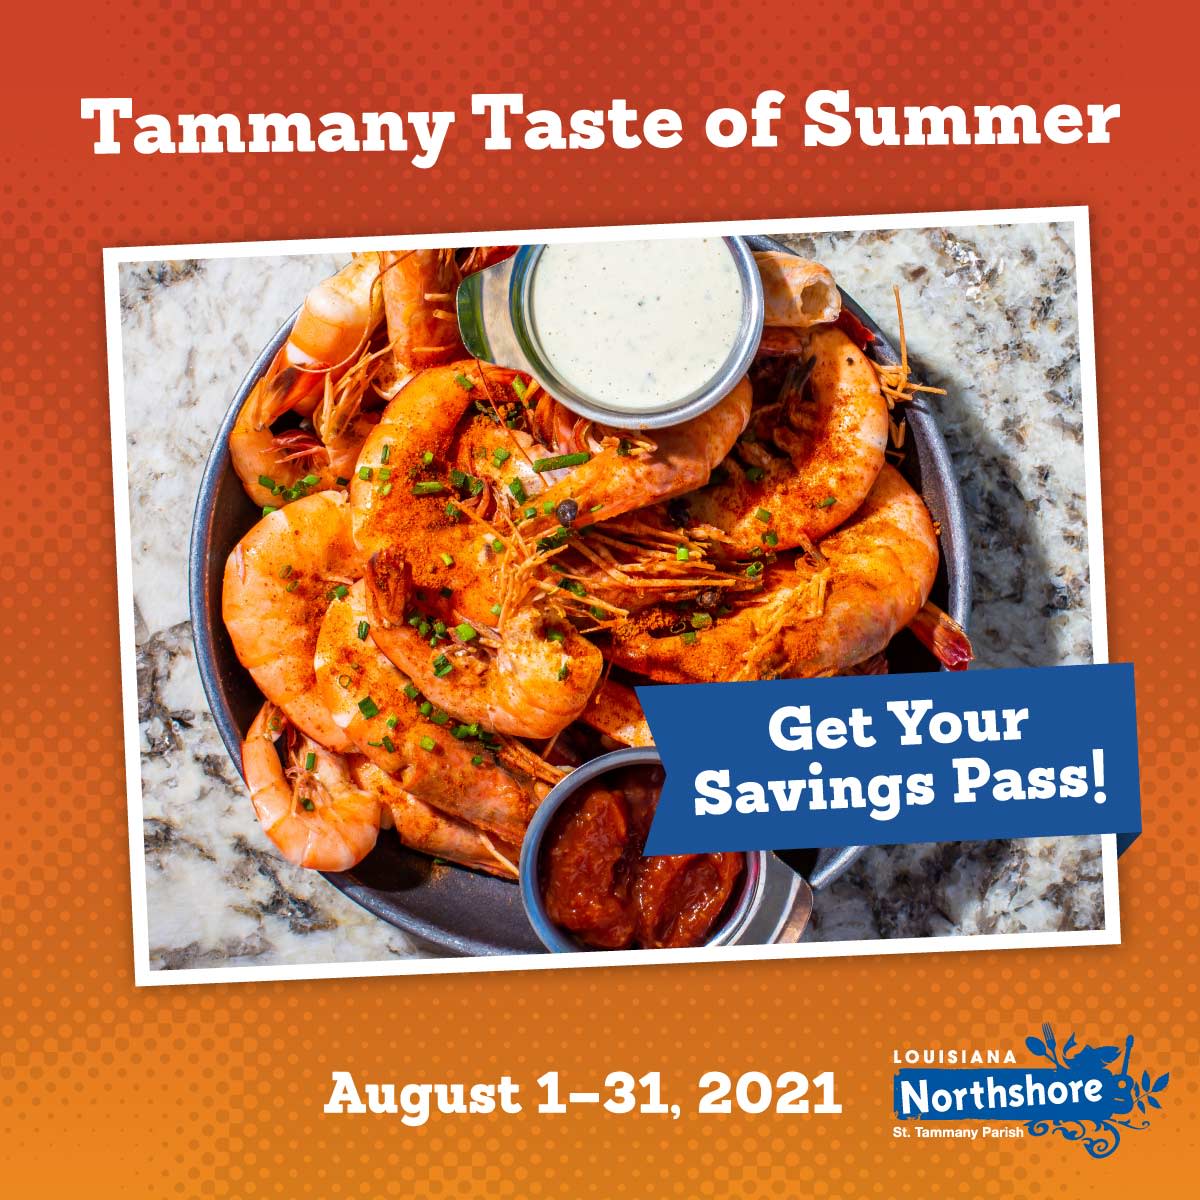 Tammany Taste of Summer 2021 restaurants with prixfixe menus